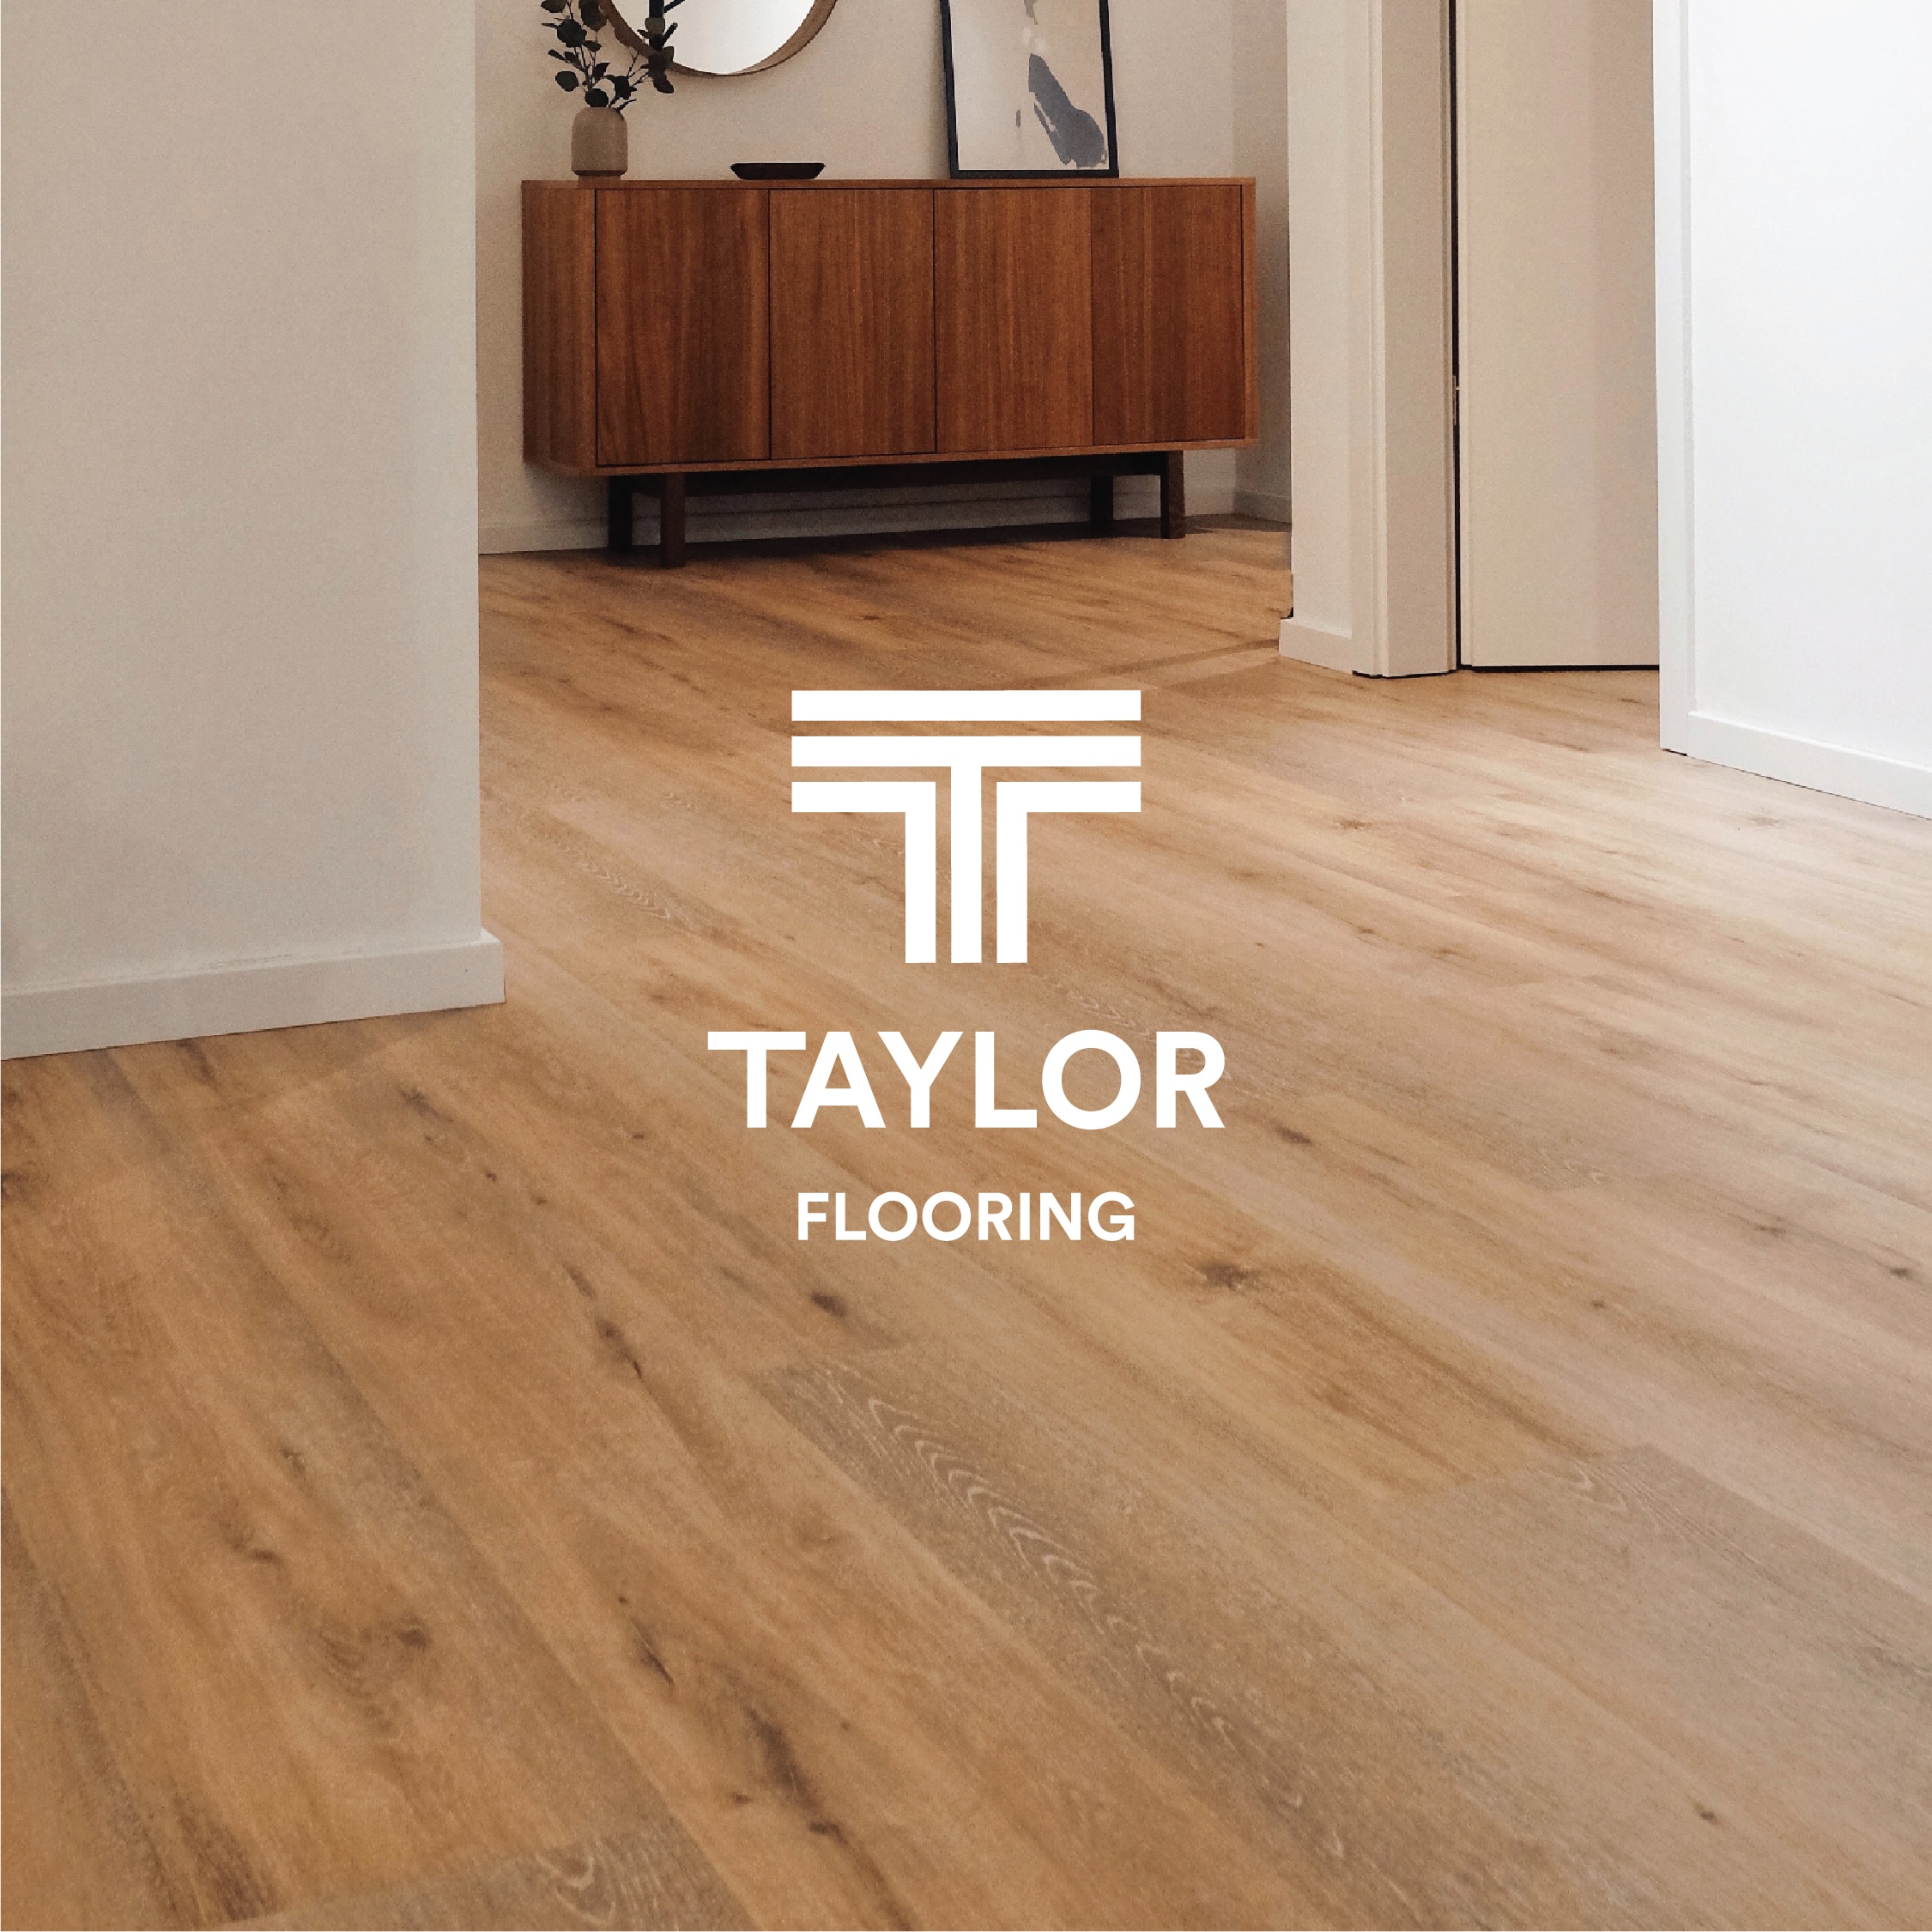 Taylor_Flooring_Branding_By_Stellen_Design_Brand Imagery 2